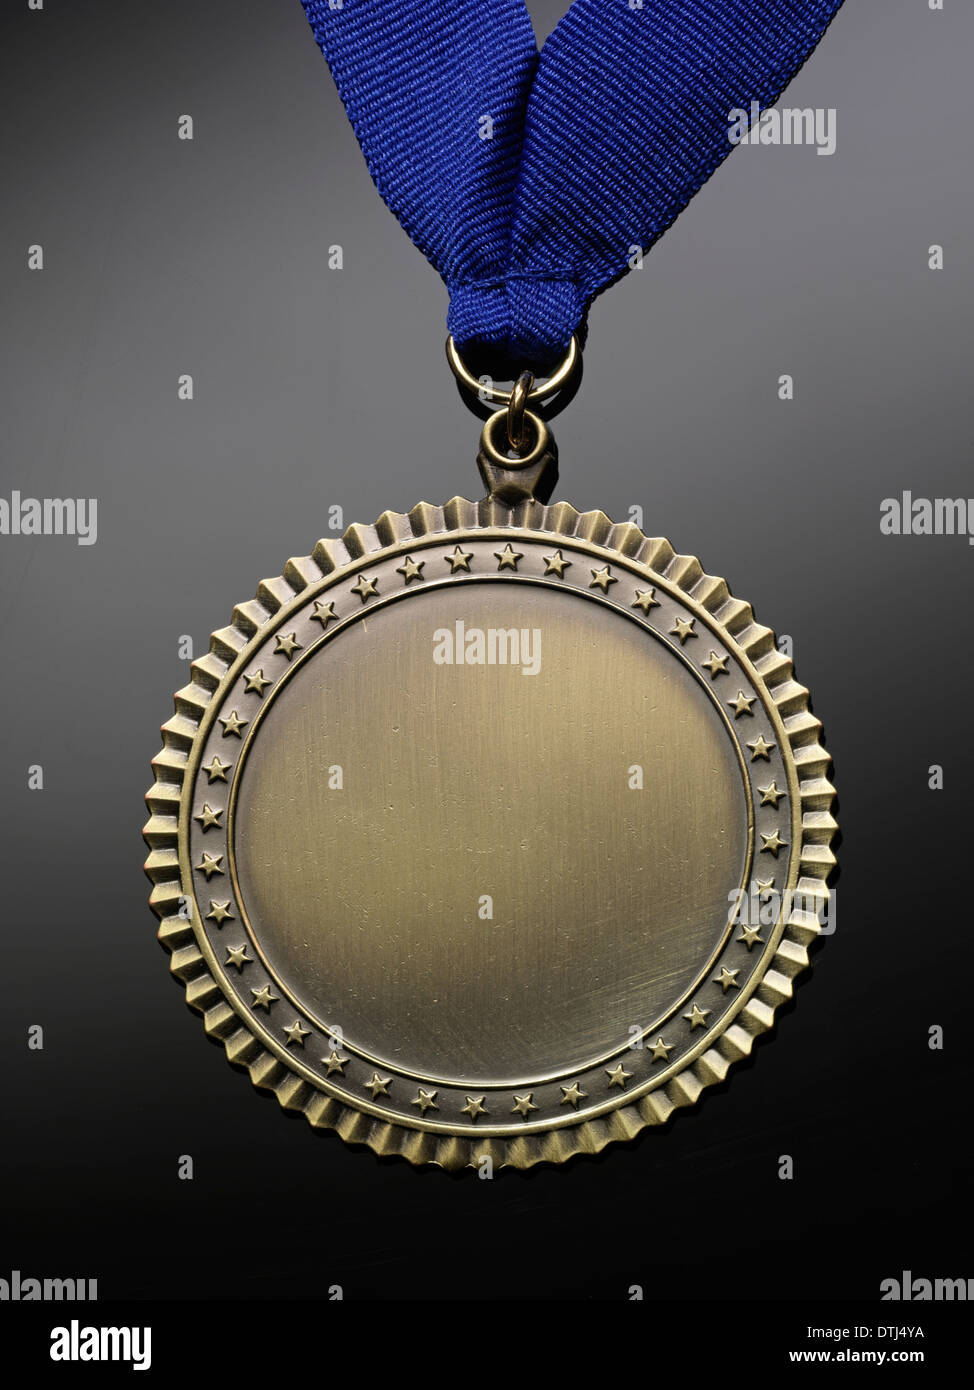 Medal on Black background Stock Photo